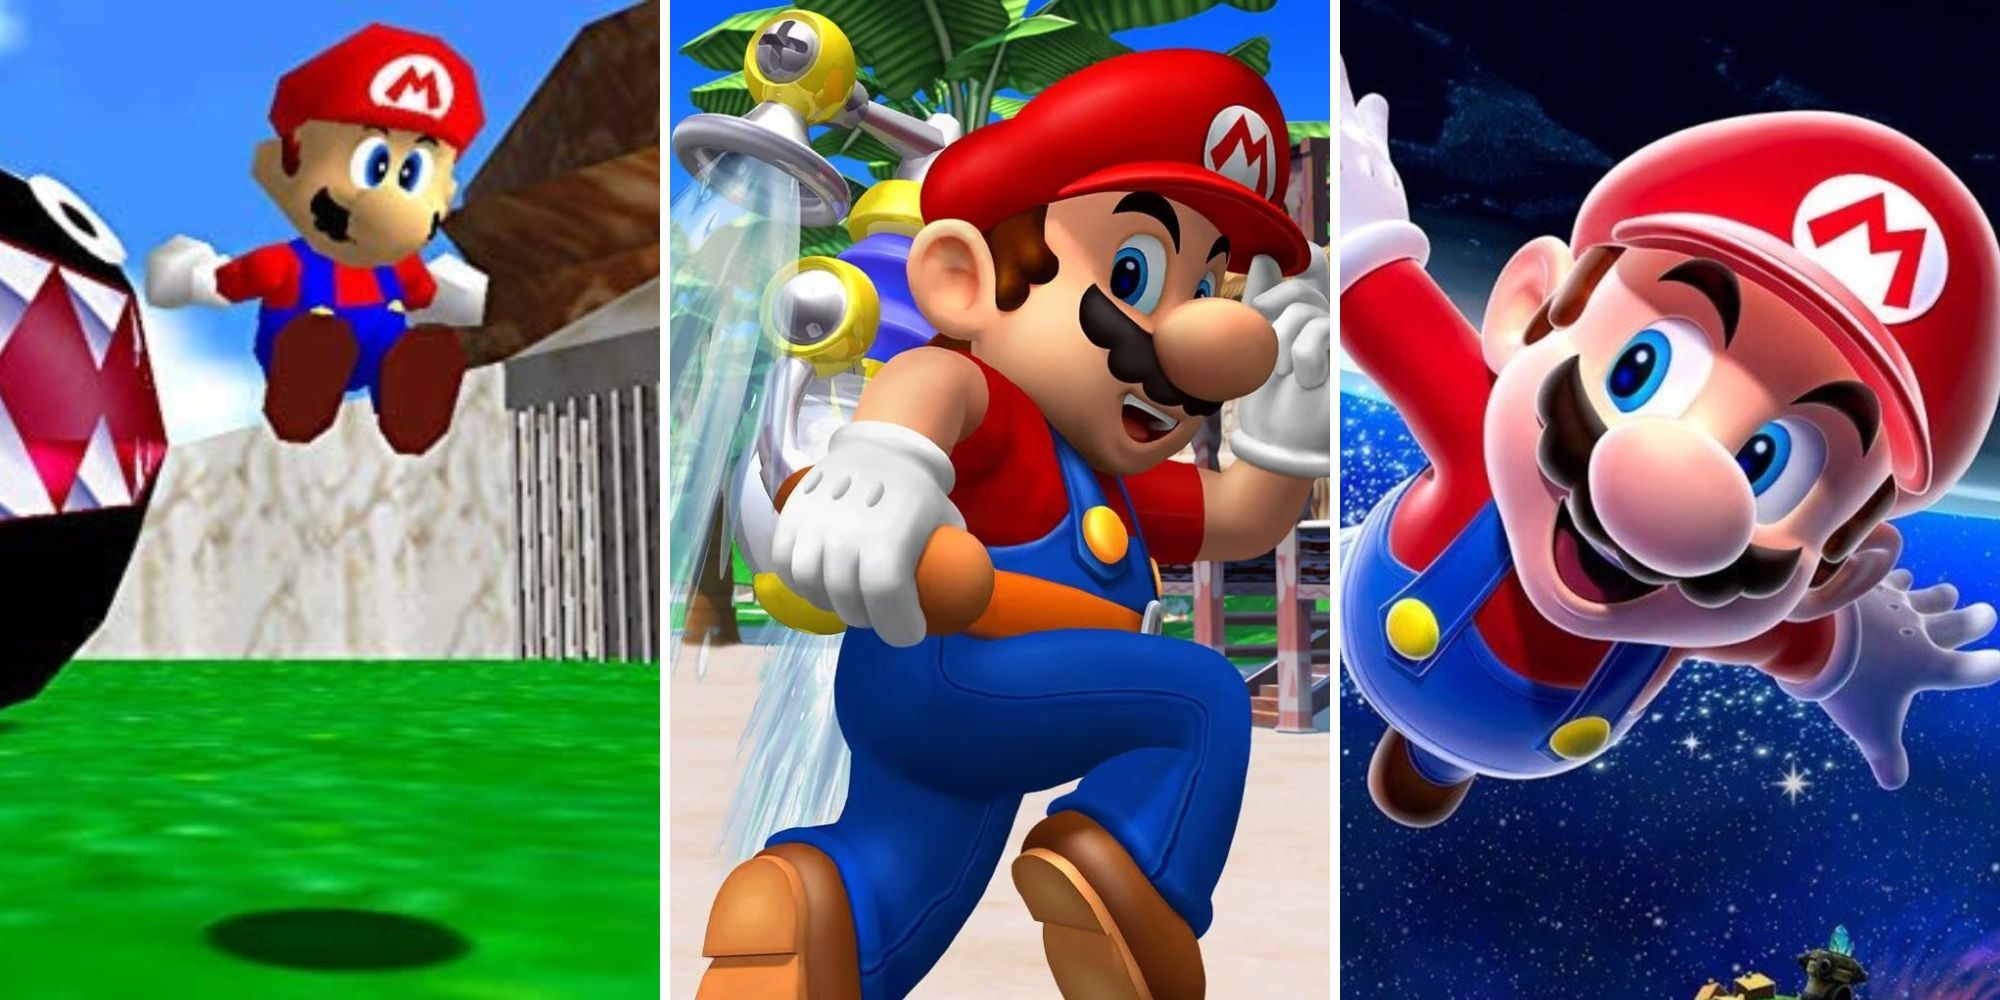 Mario jumps away from a Chain-Chomp, Mario jumps with F.L.U.D.D, Mario flies through space